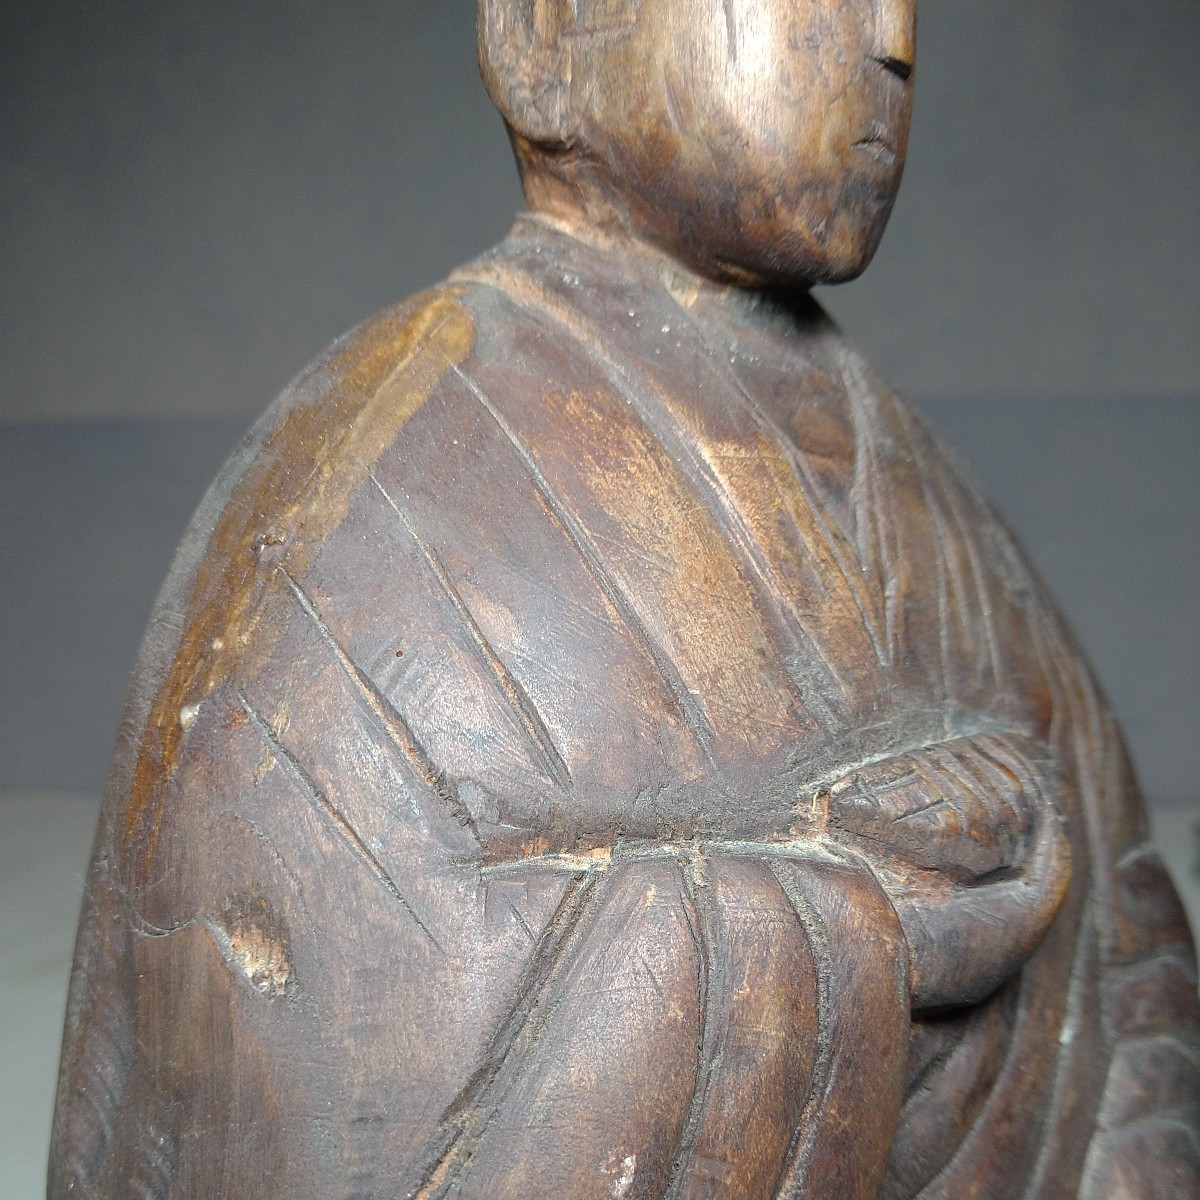 a-1209◆ 仏教美術 仏像 木彫 仏 木製 民間仏 雲海 1240g 高さ25.5cm◆ 状態は画像で確認してください。_画像10